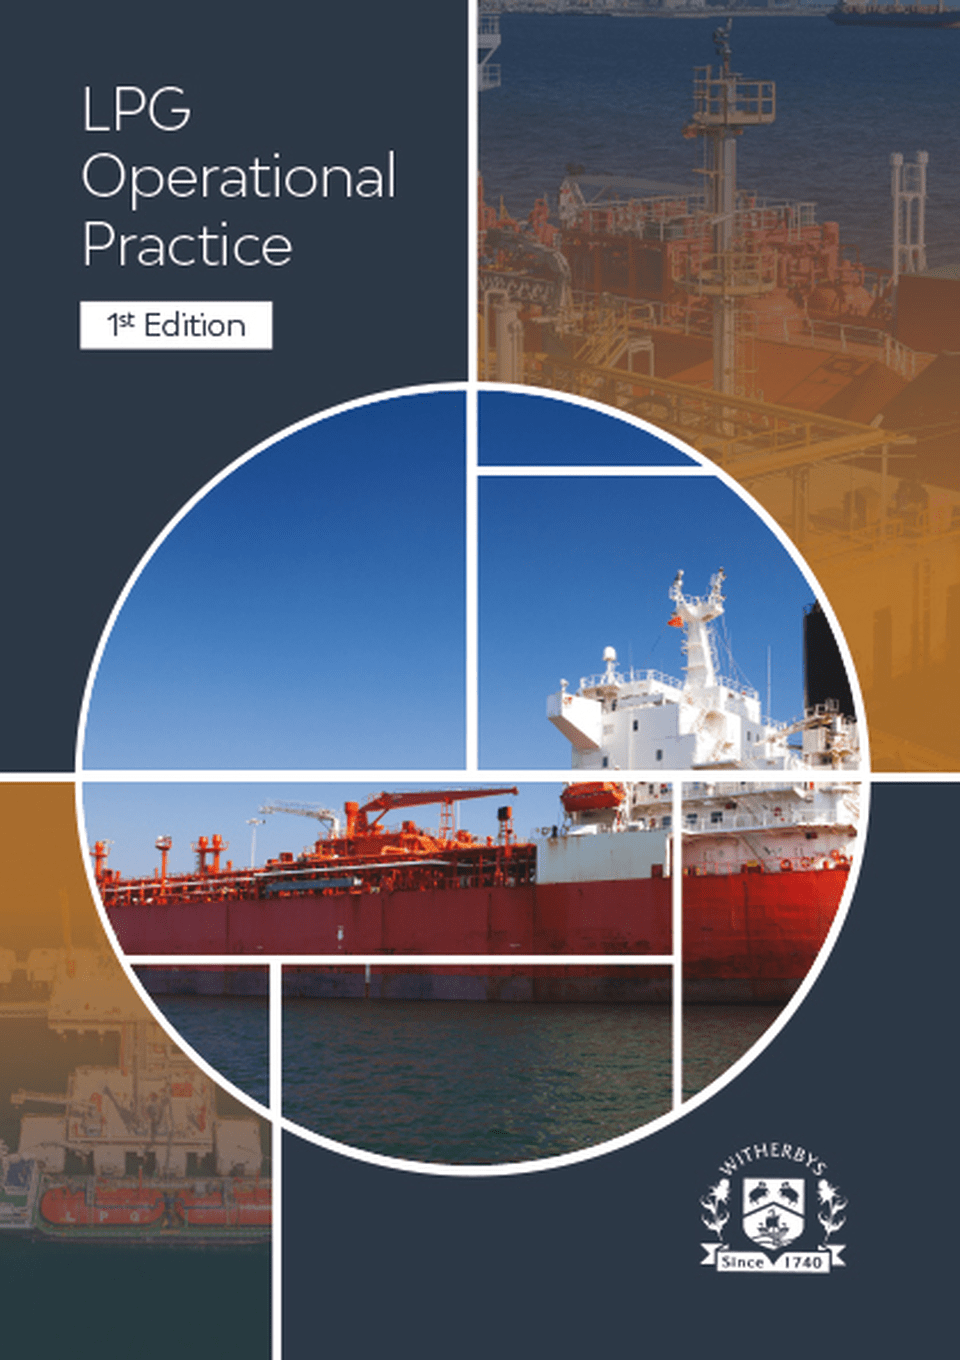 LPG Operational Practice, 1st Edition 2022